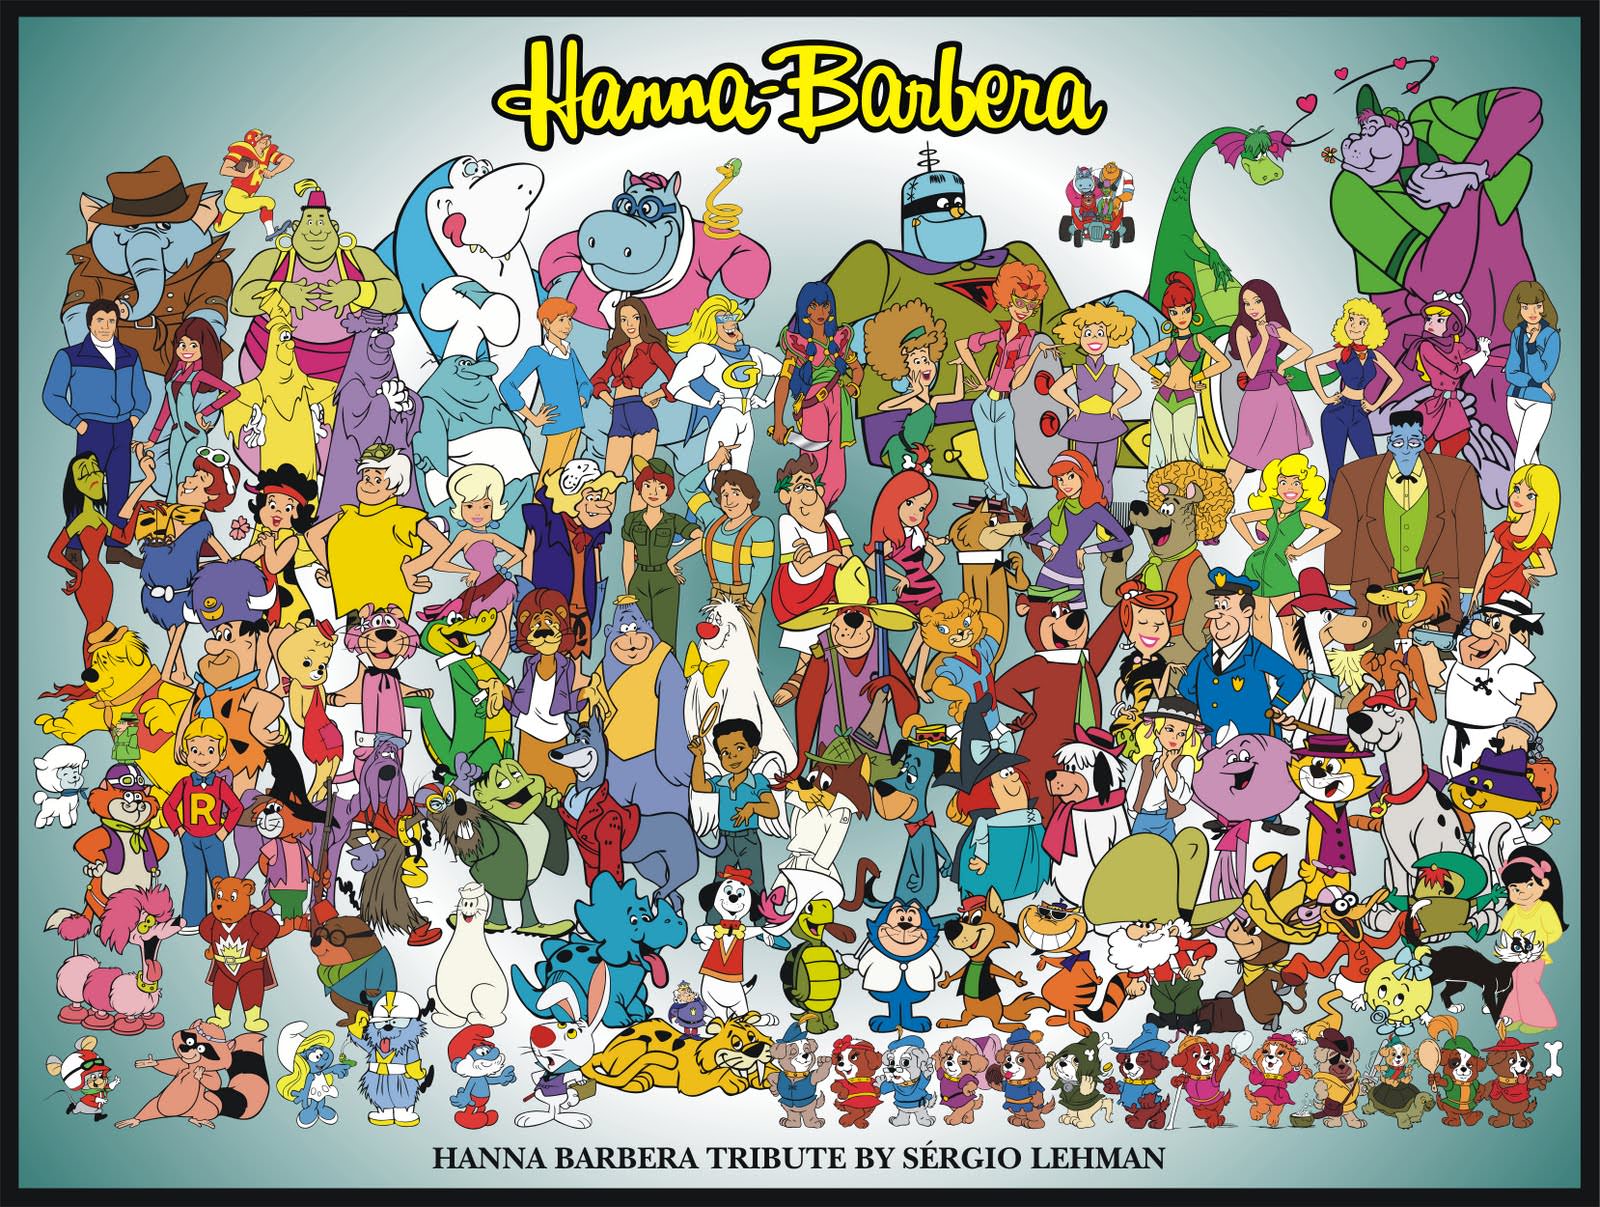 http://nerdpai.com/wp-content/uploads/2013/04/Tributo-a-Hanna-Barbera.jpg